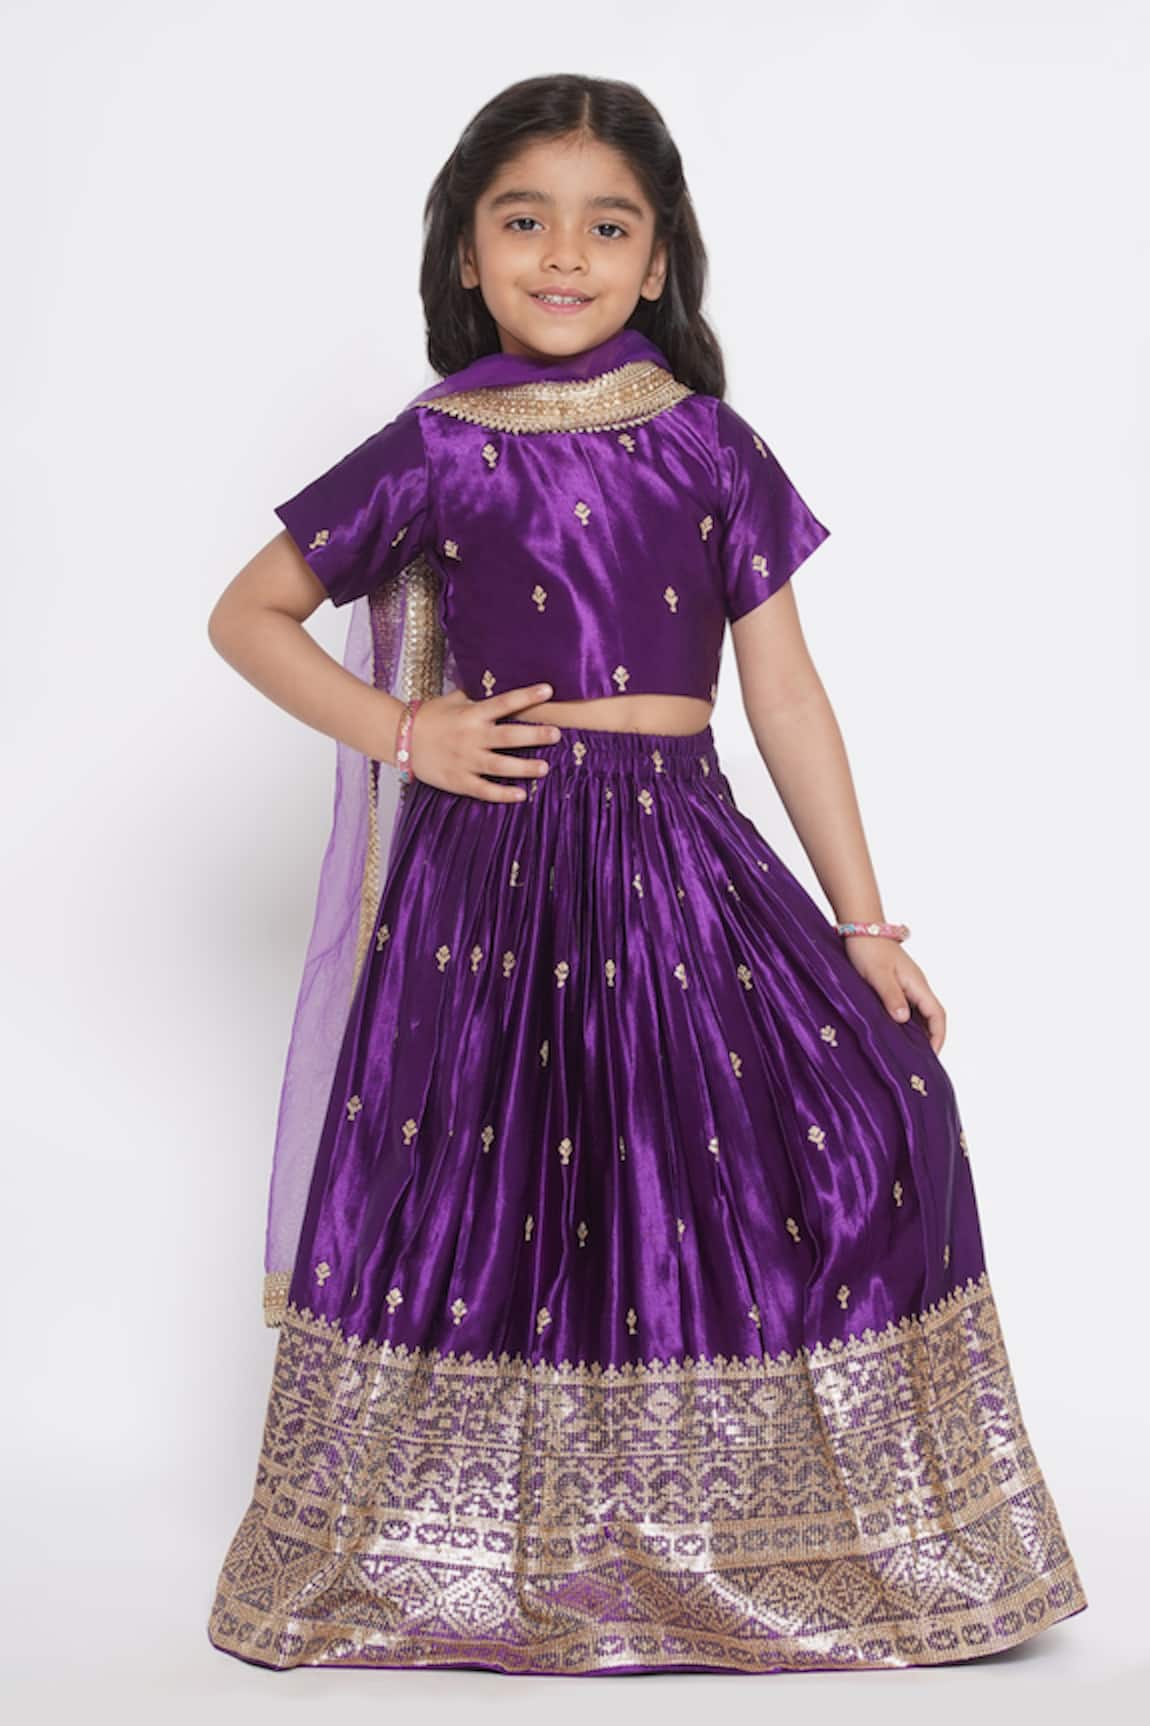 Kids pattu pavada designs by Angalakruthi Bangalore india | Kids blouse  designs, Kids dress patterns, Dresses kids girl